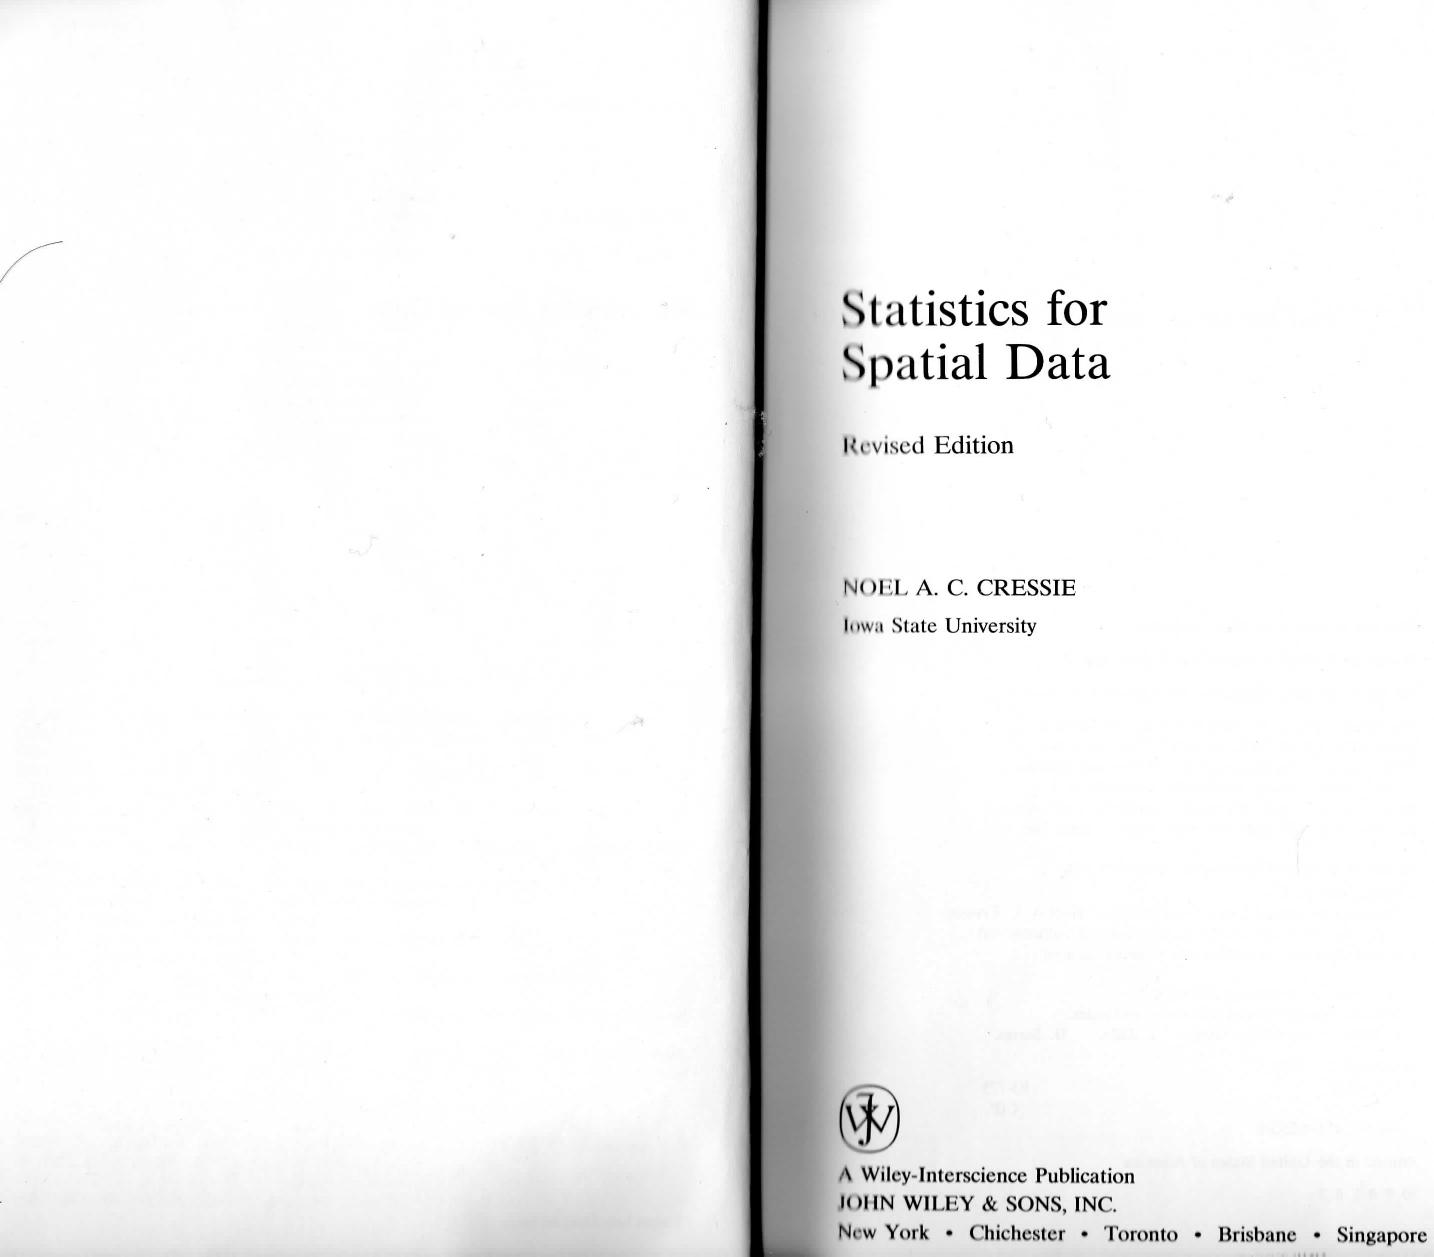 statistics-for-spatial-data-revised-version-1993